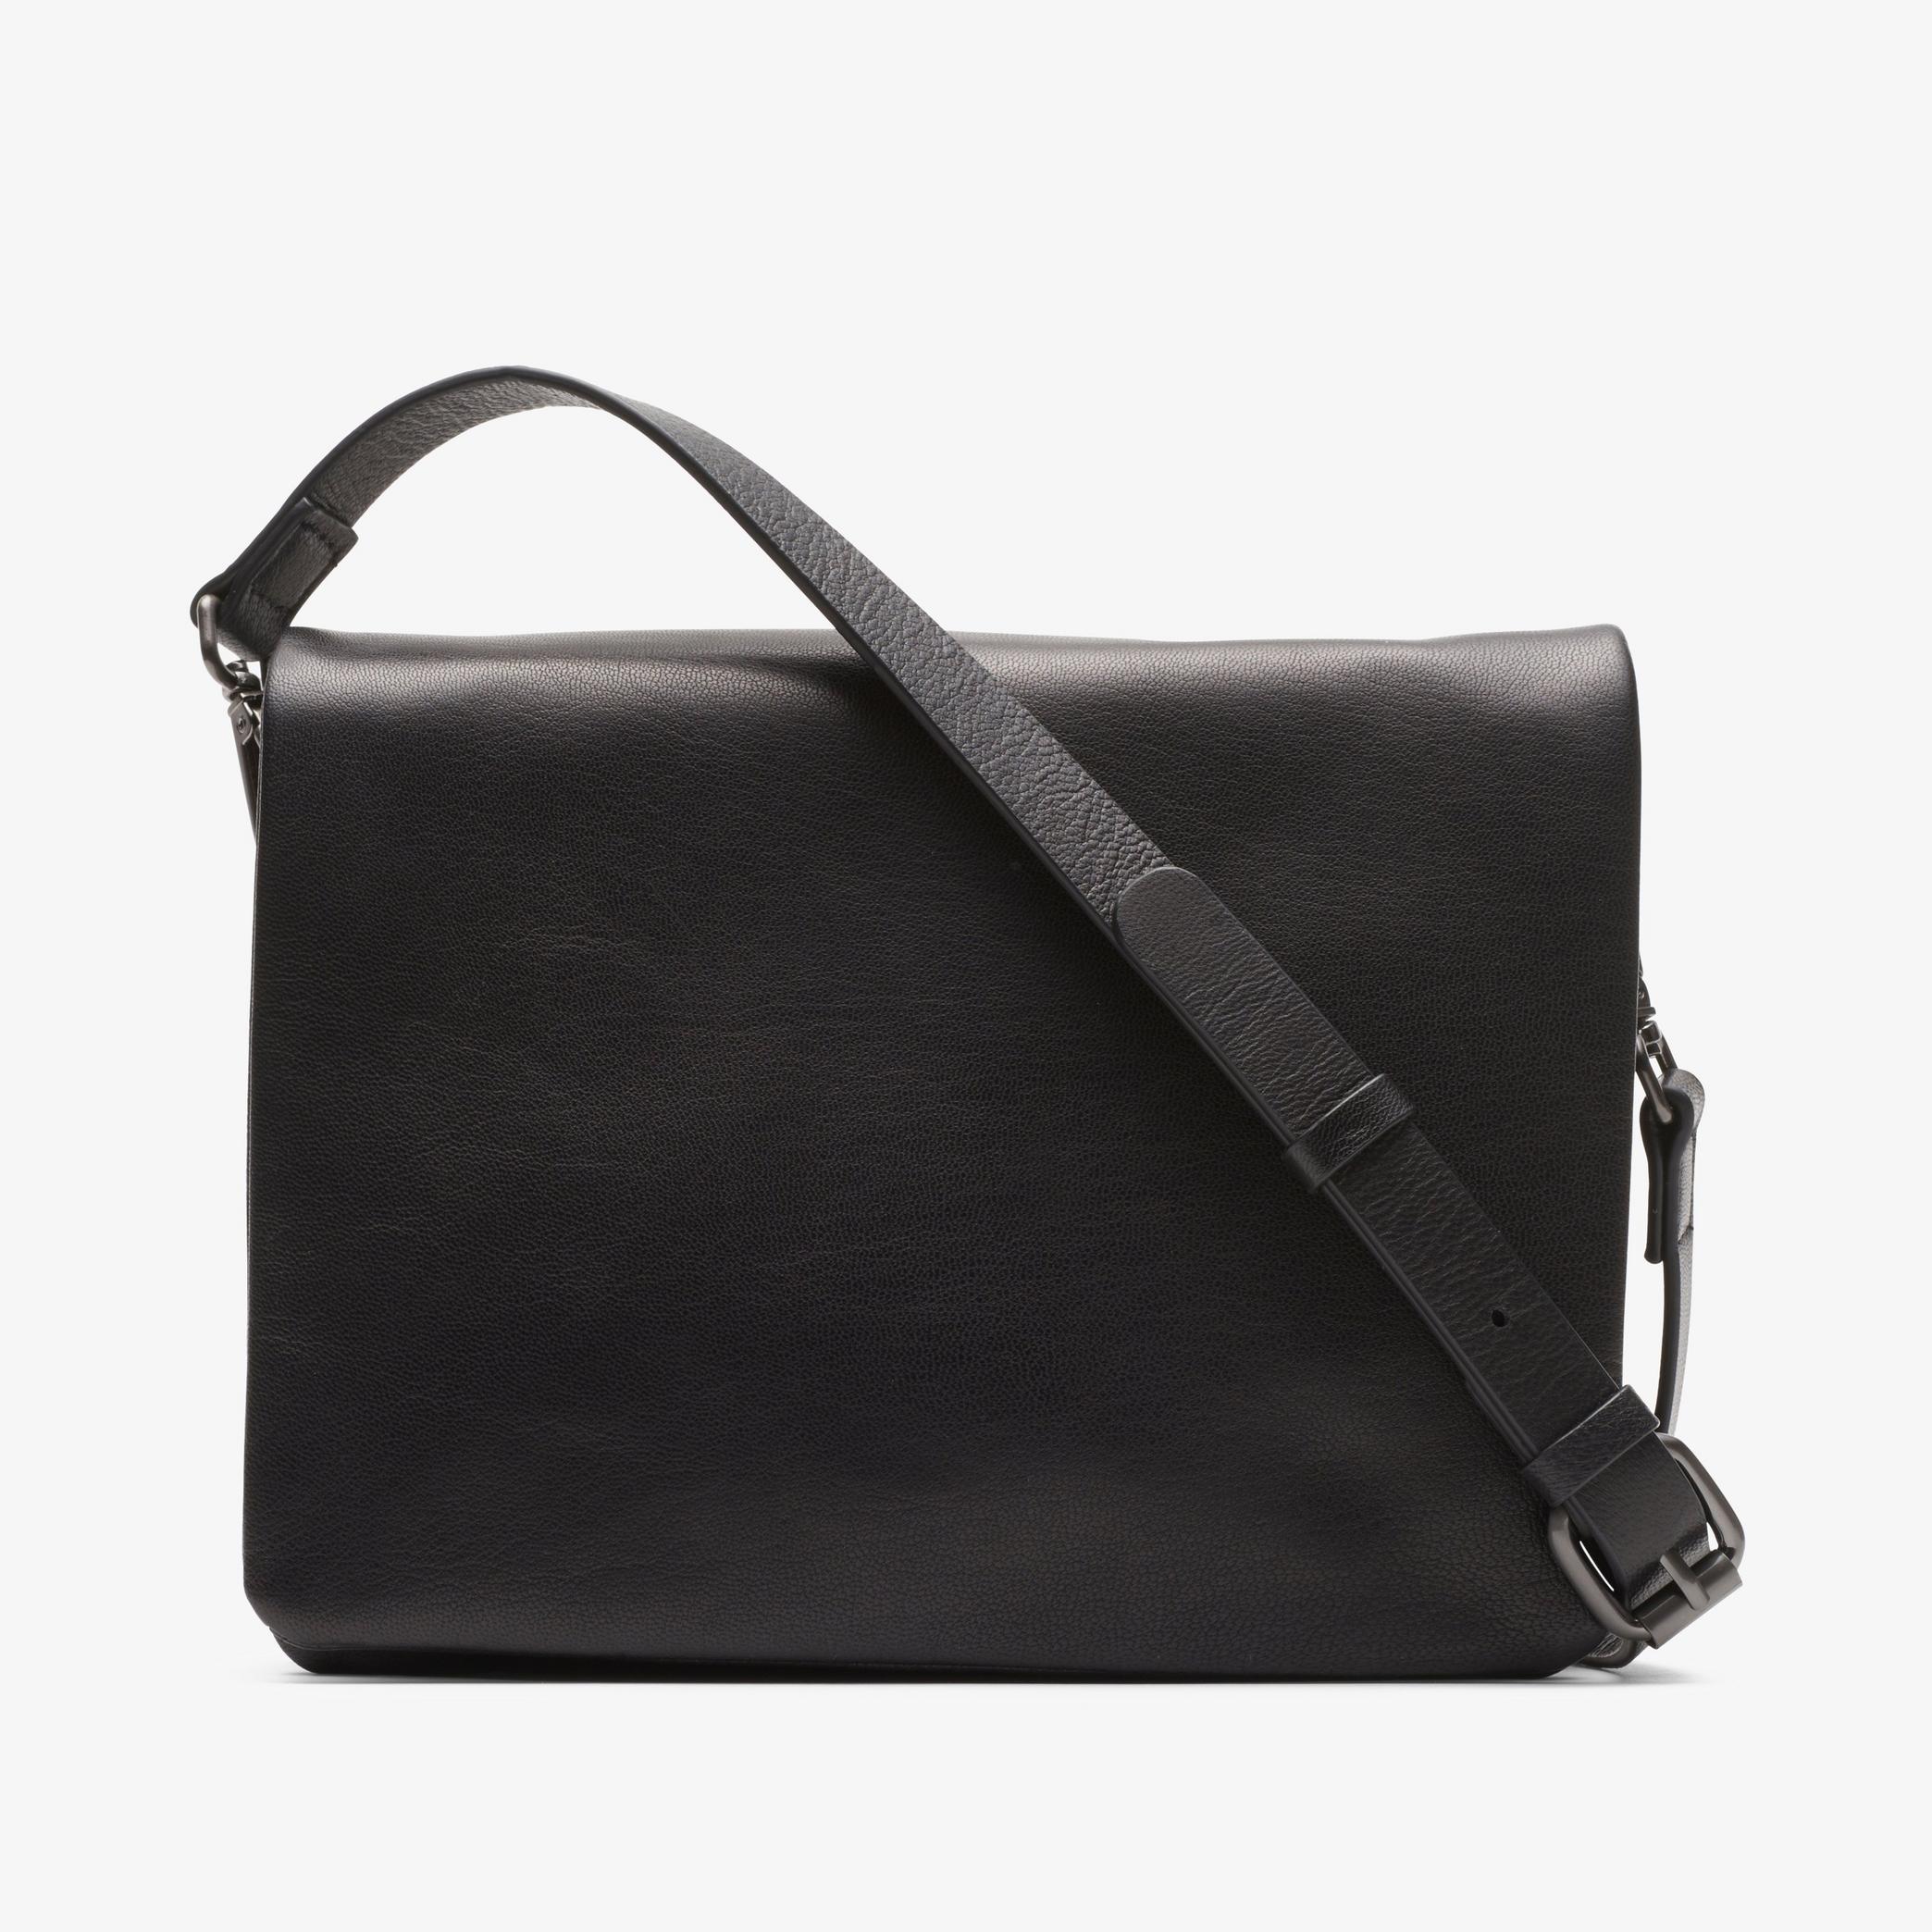 Treen Medium Black Leather Across Body Bag, view 1 of 4